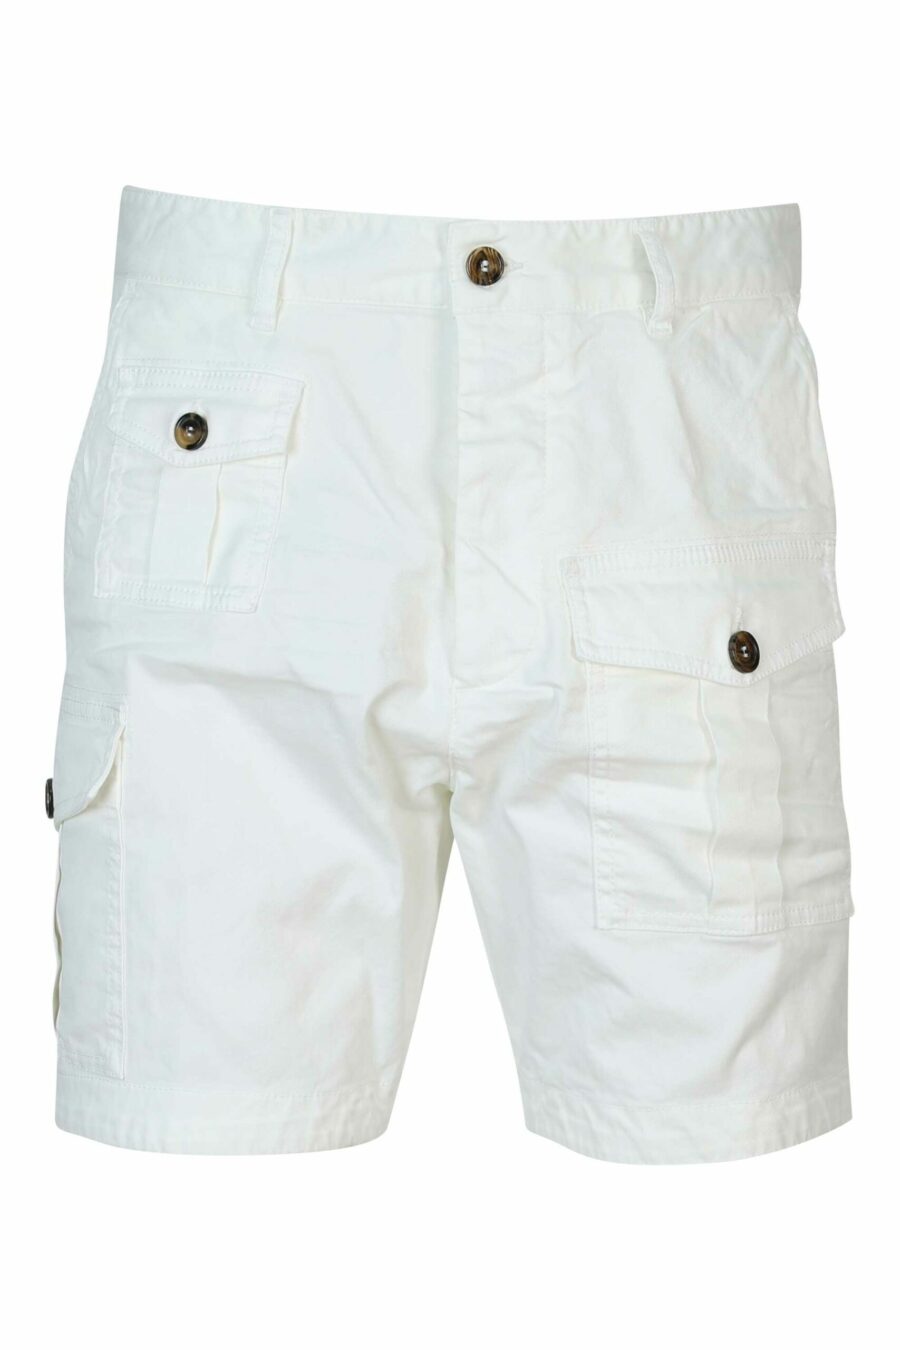 White denim shorts "sexy cargo shorts" - 8052134622513 scaled